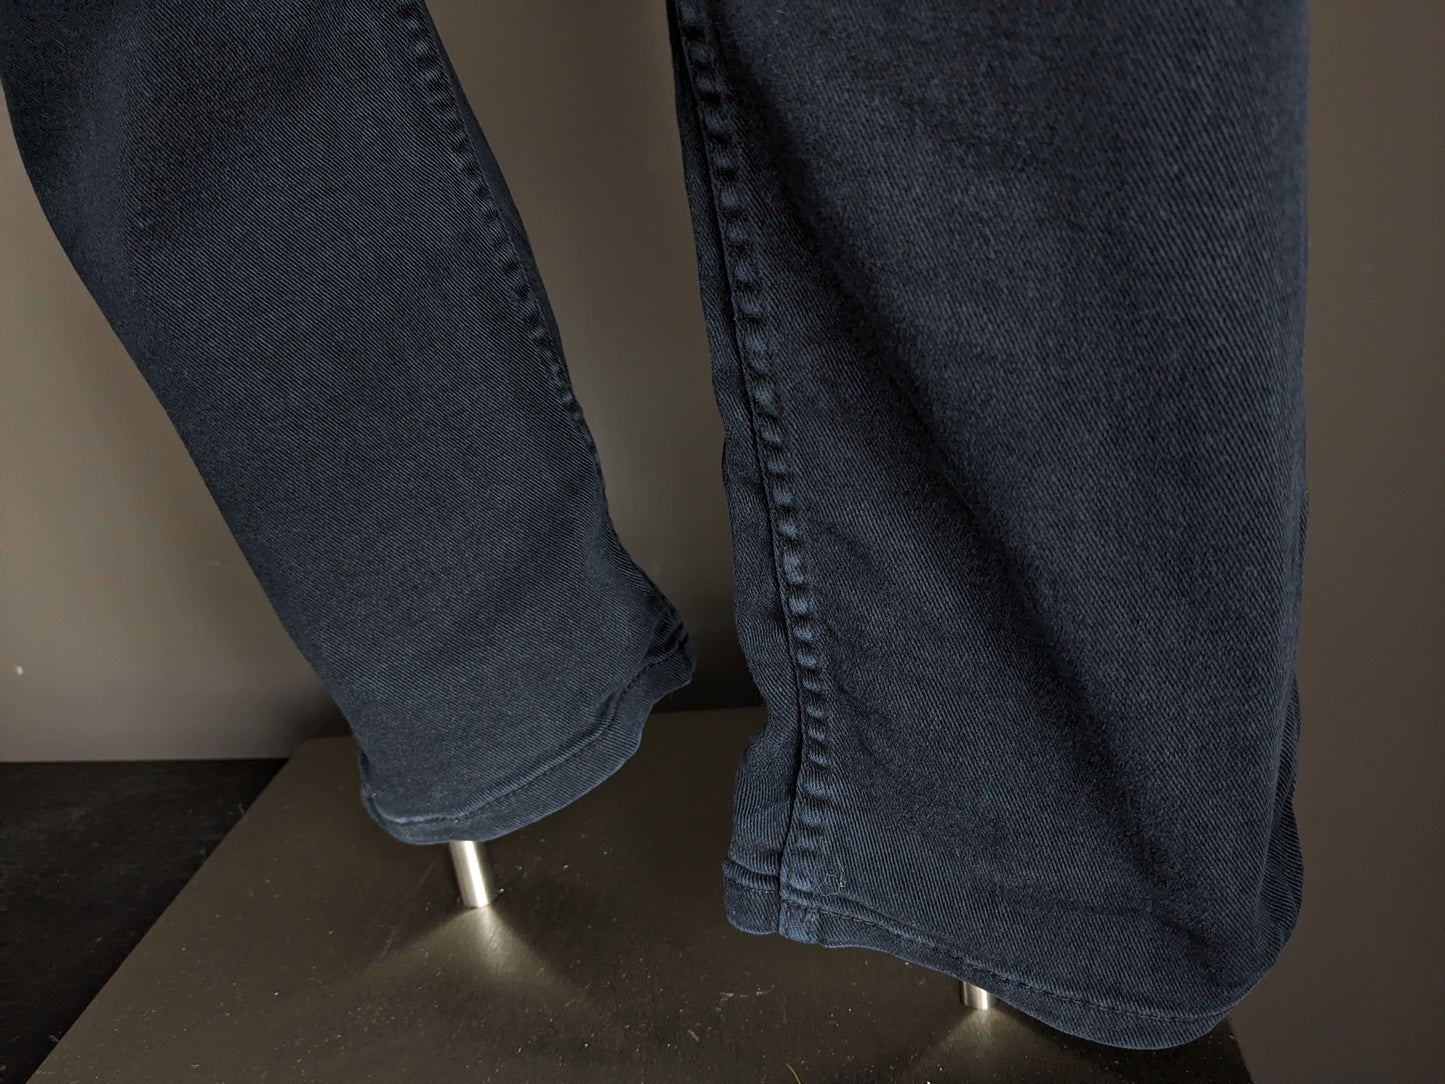 B Basic by Brams Paris Jeans. Black colored. Size W34 - L34. Comfort fit. stretch.